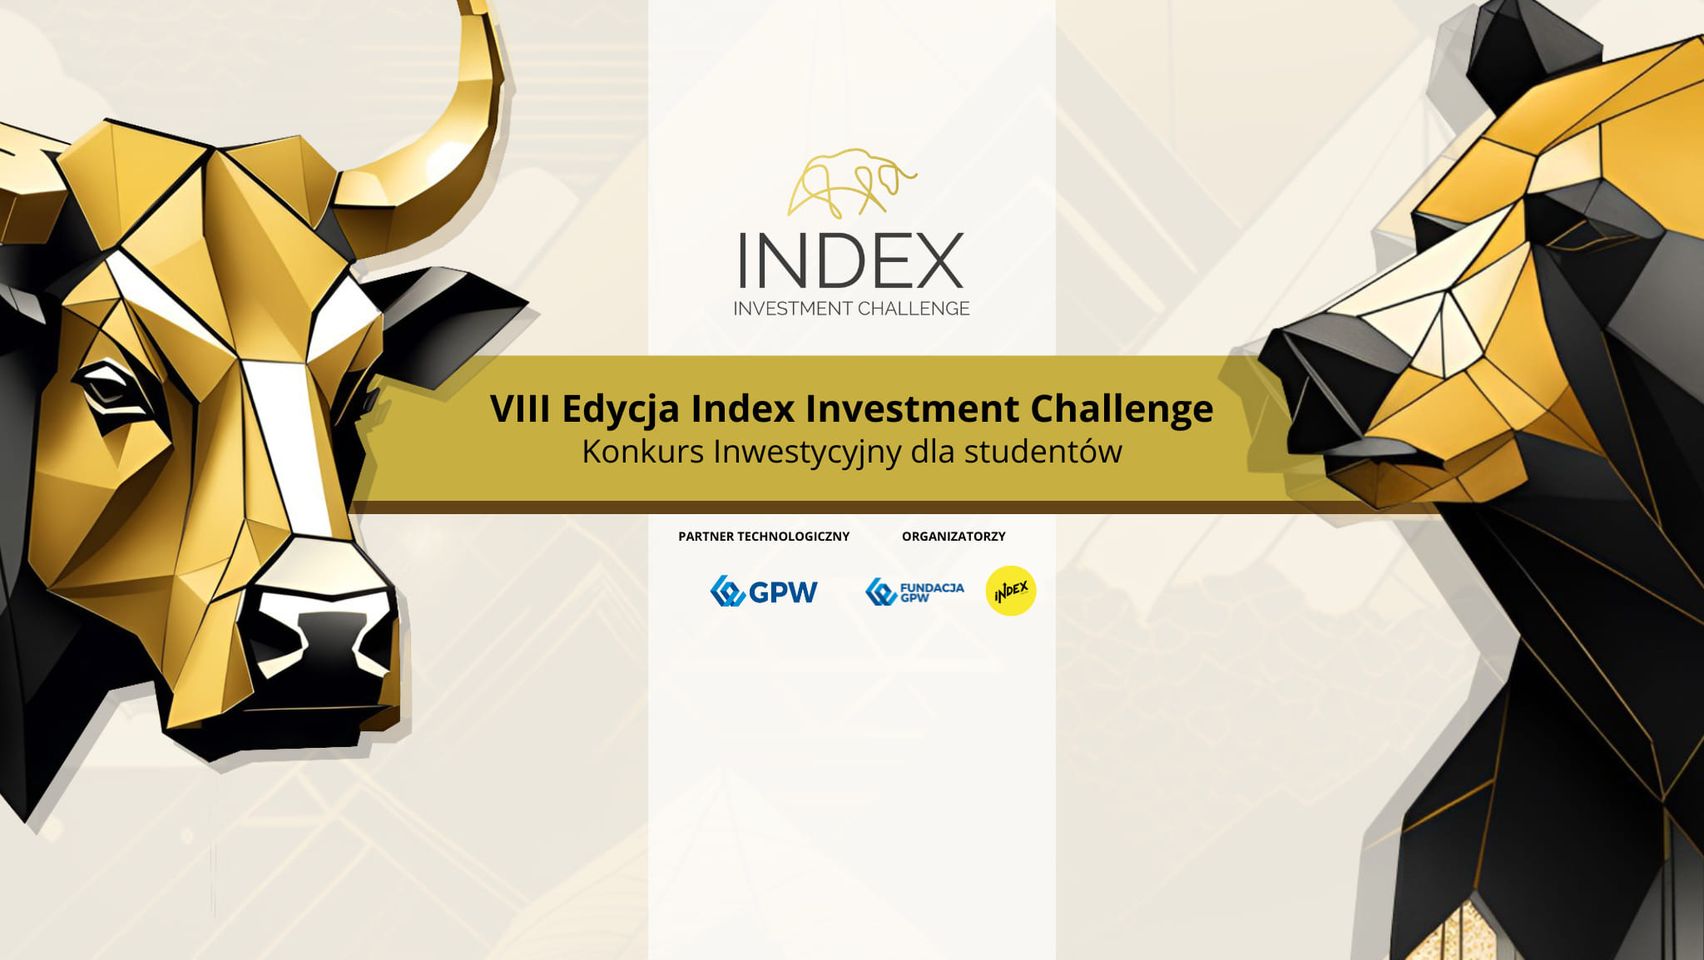 INDEX Investment Challenge